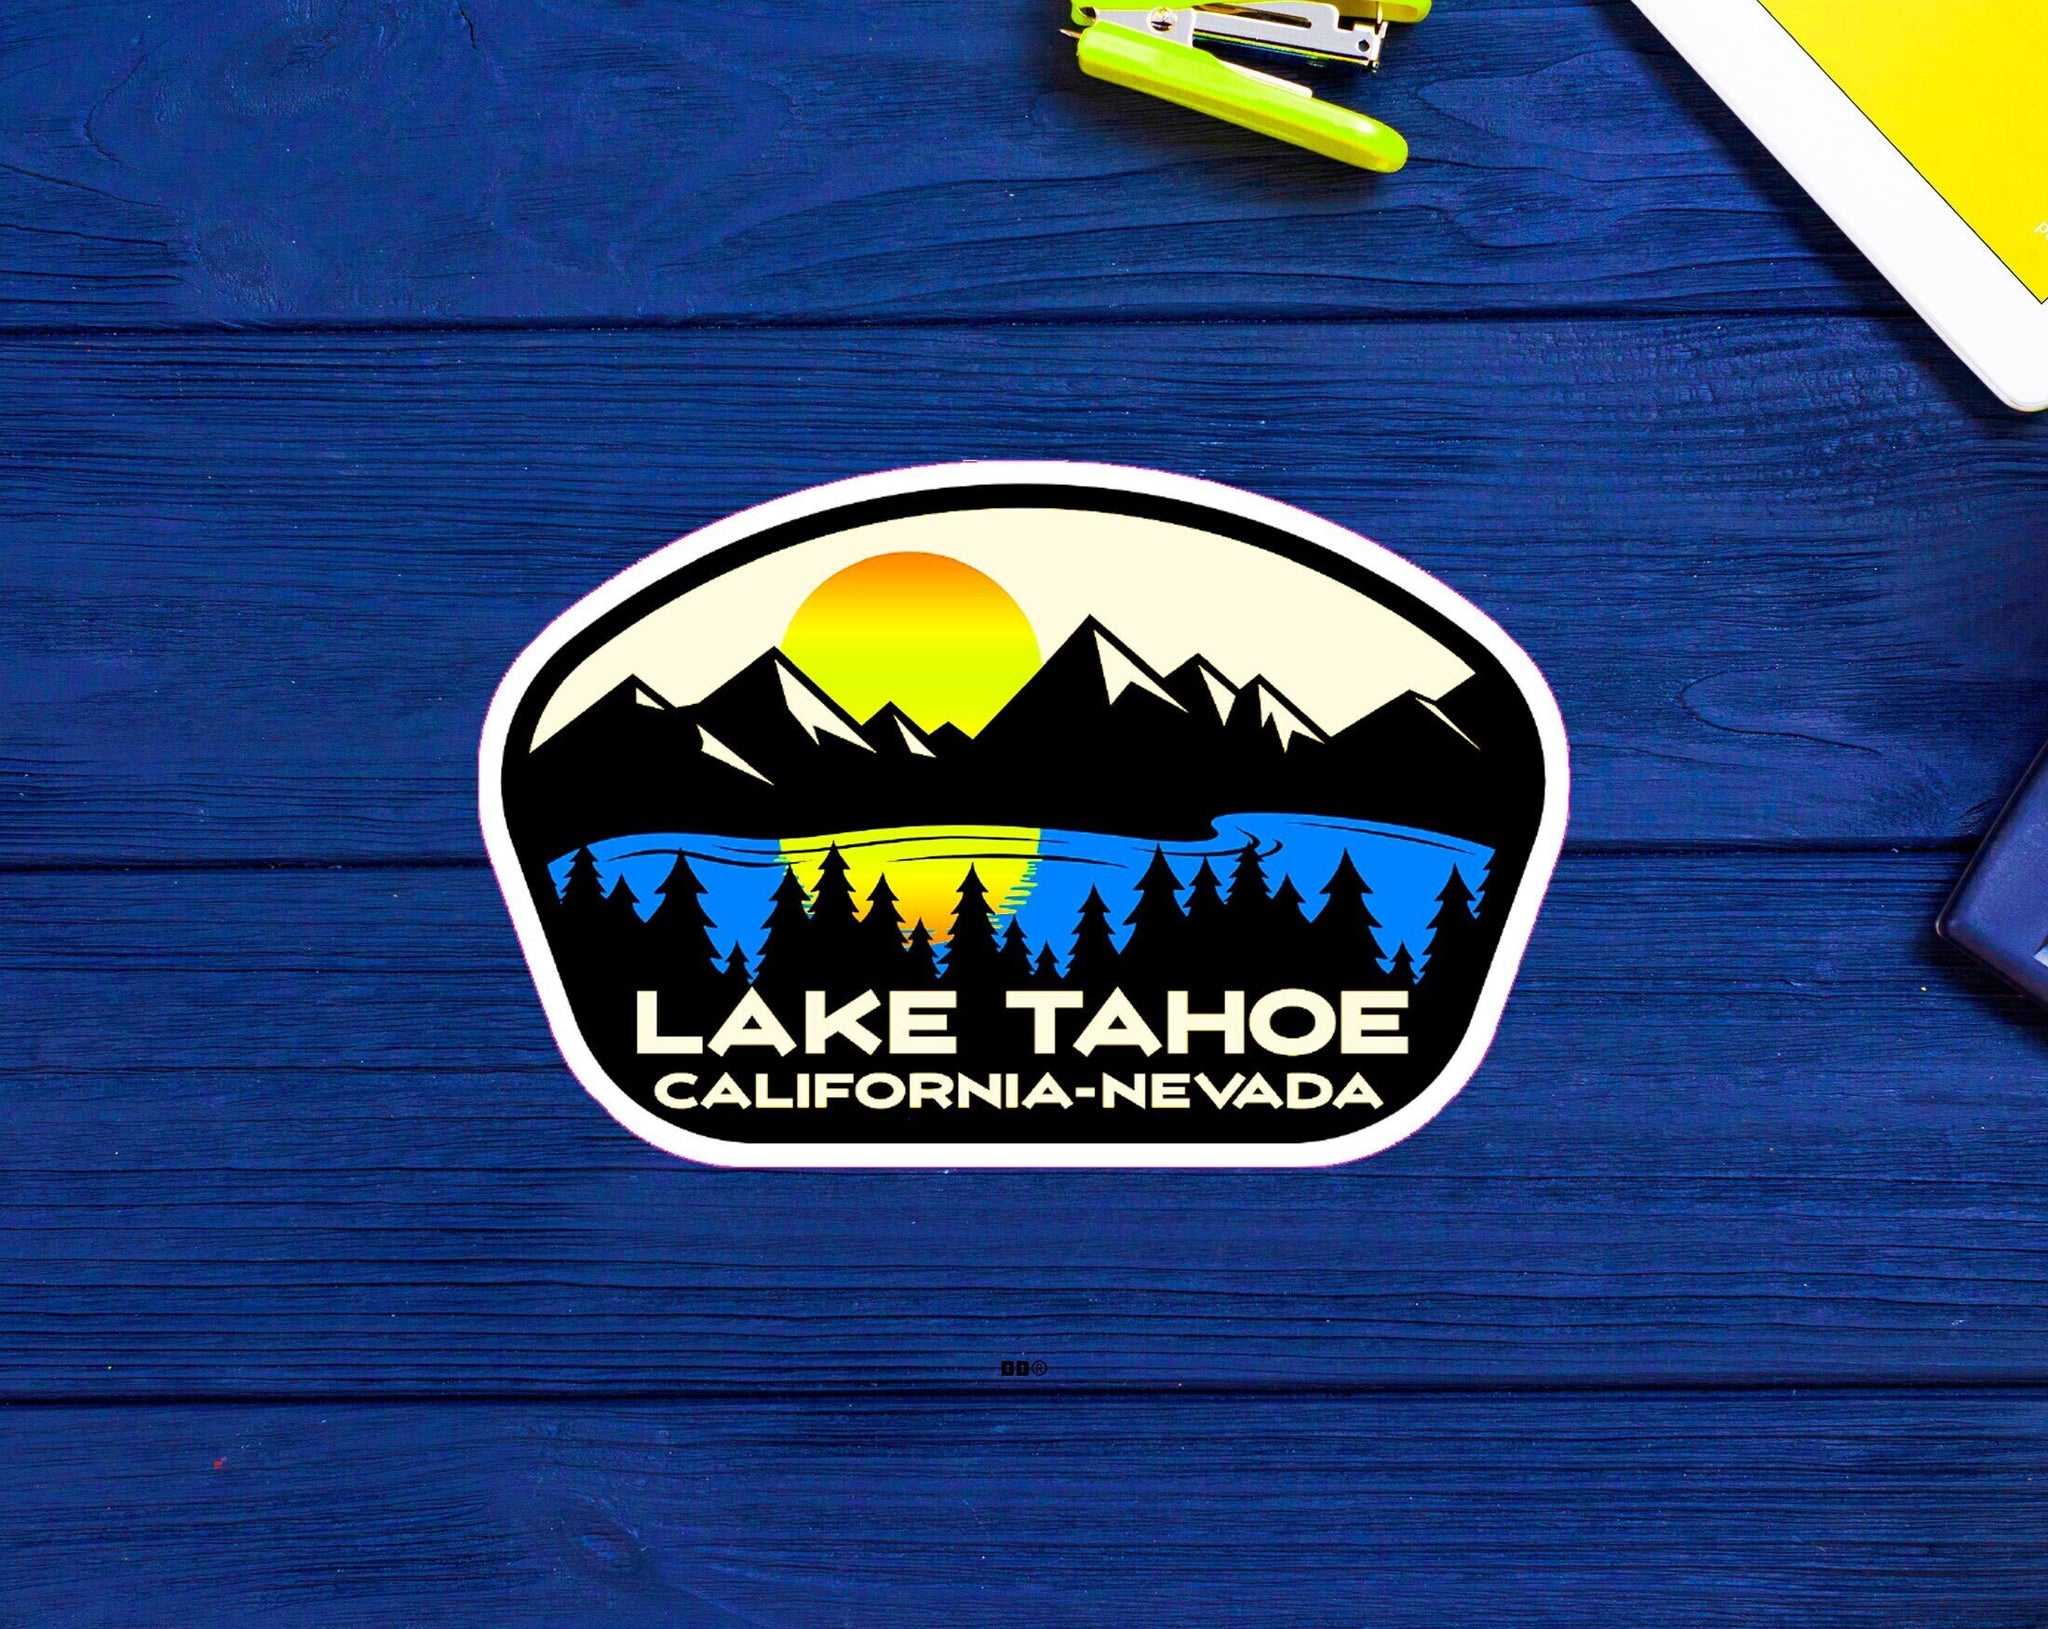 Lake Tahoe California Nevada Decal Sticker 3.75" X 2.5" Skiing Lakes Boating